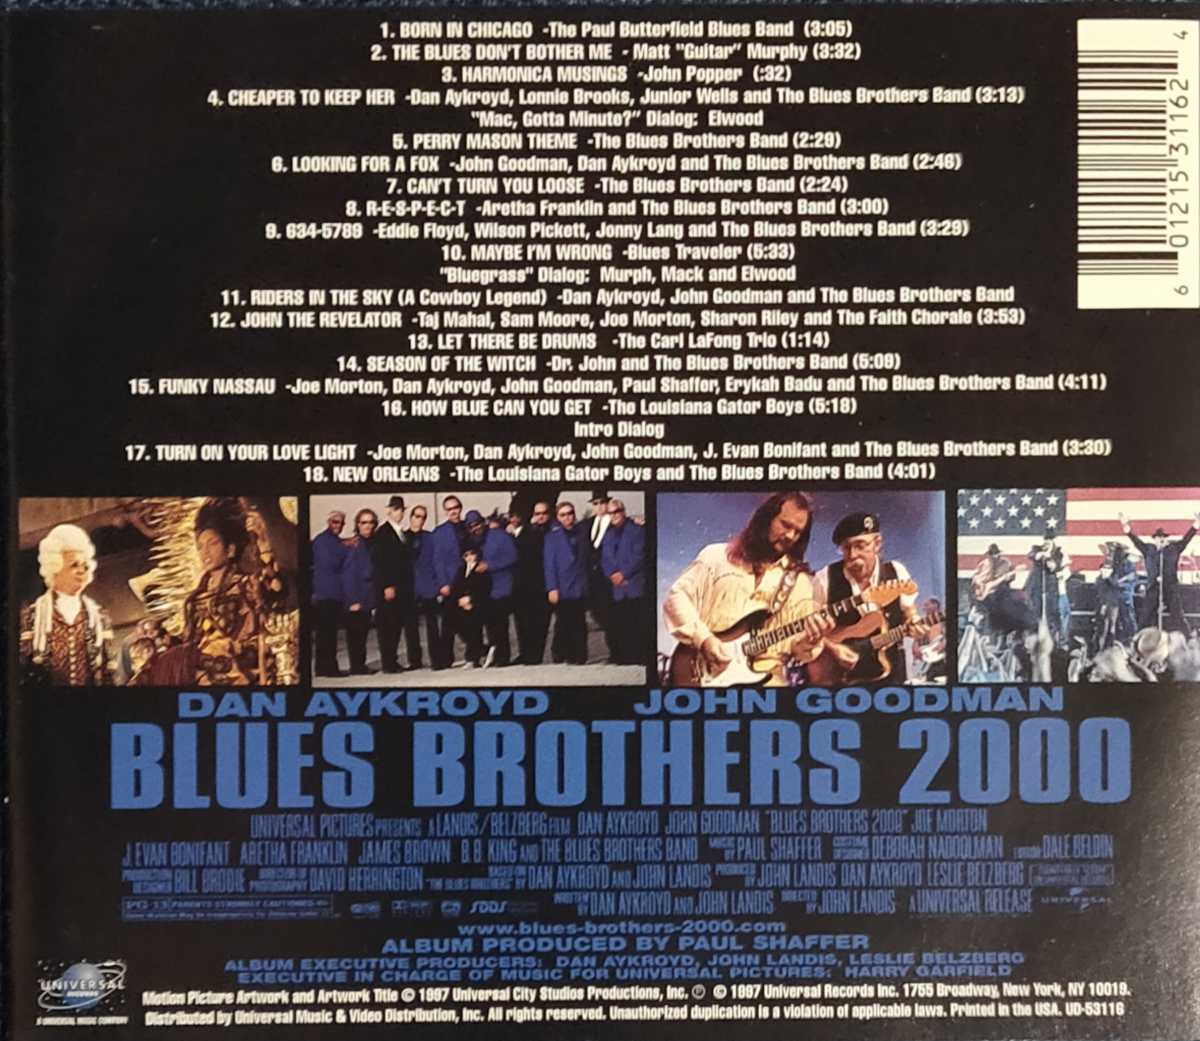  пластиковый кейс новый товар замена Blues Brothers 2000 саундтрек CD